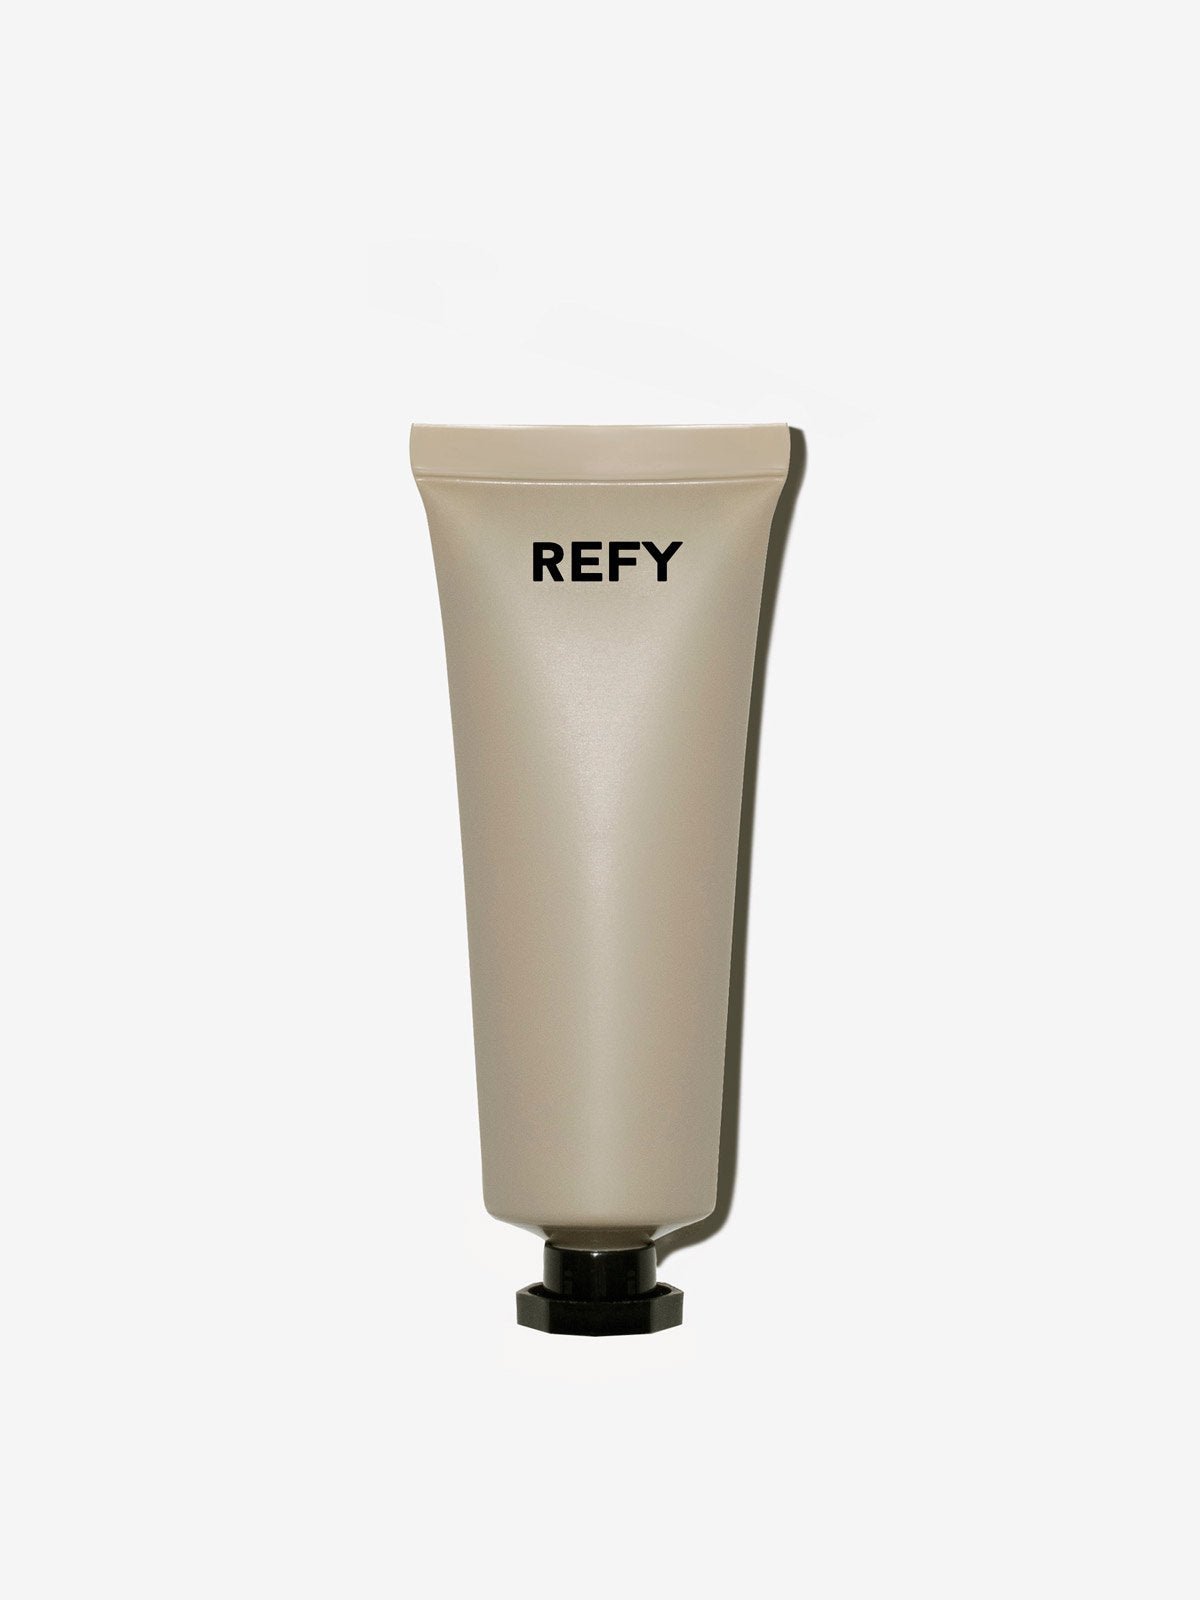 Refy Gloss Highlighter